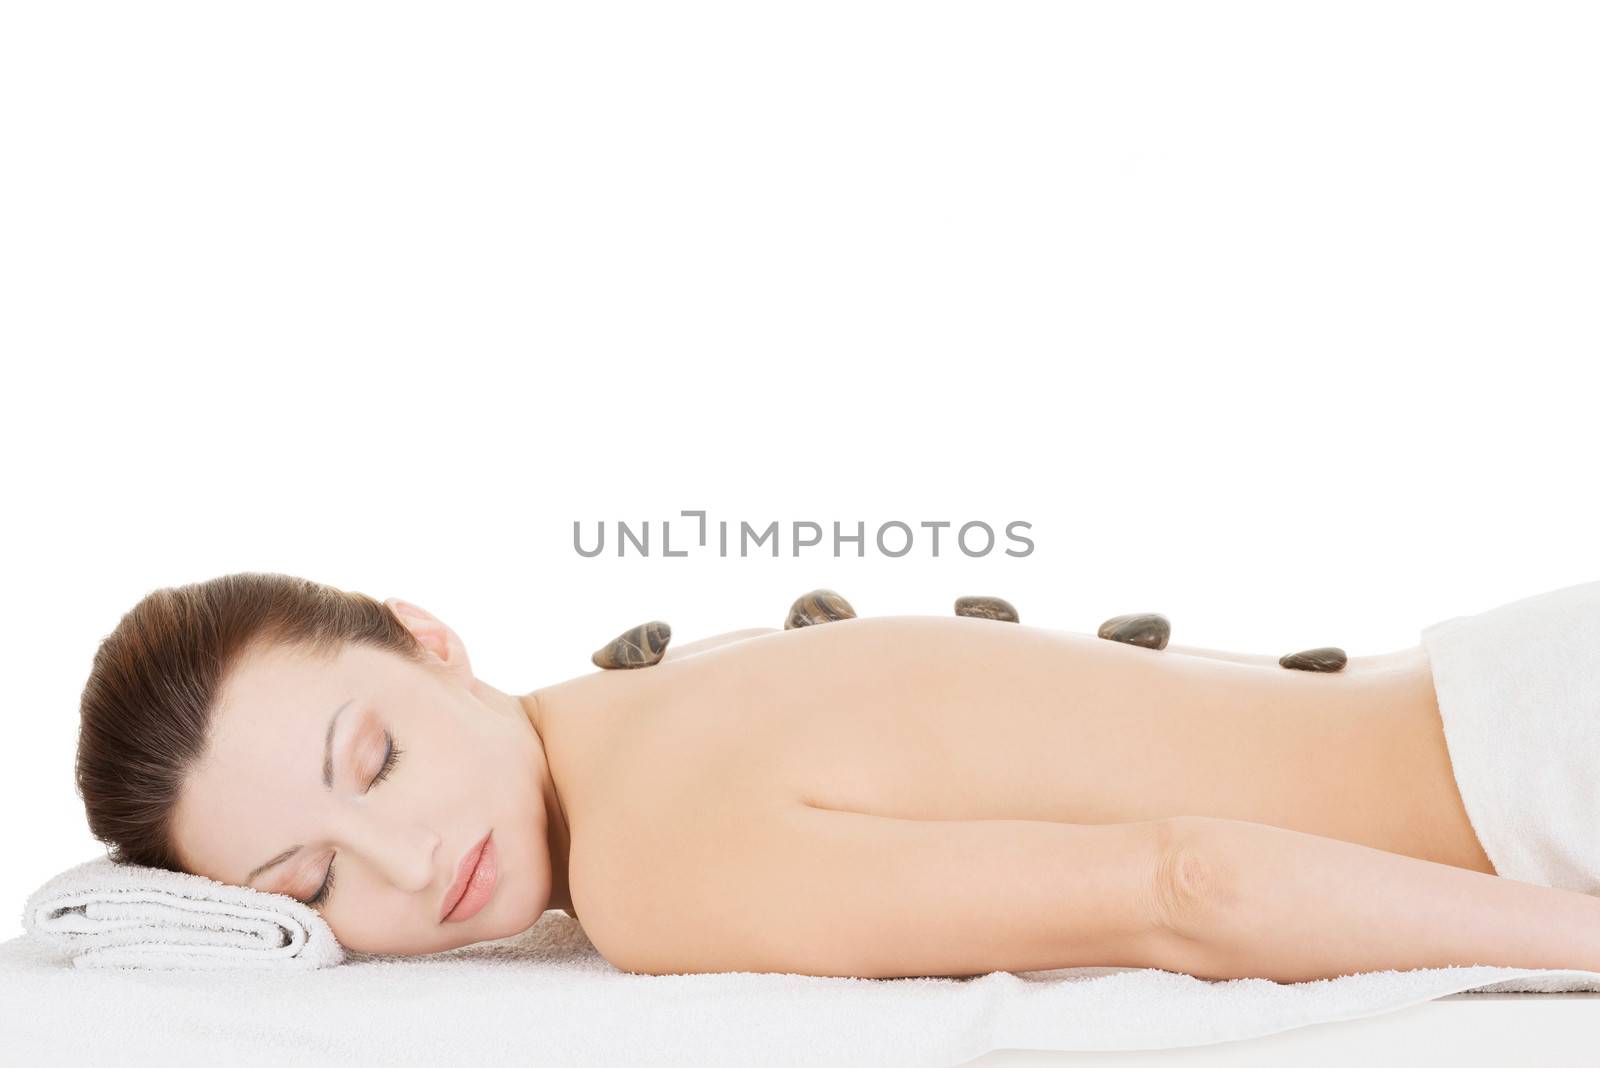 Beauty woman relaxing in spa. Stone massage.